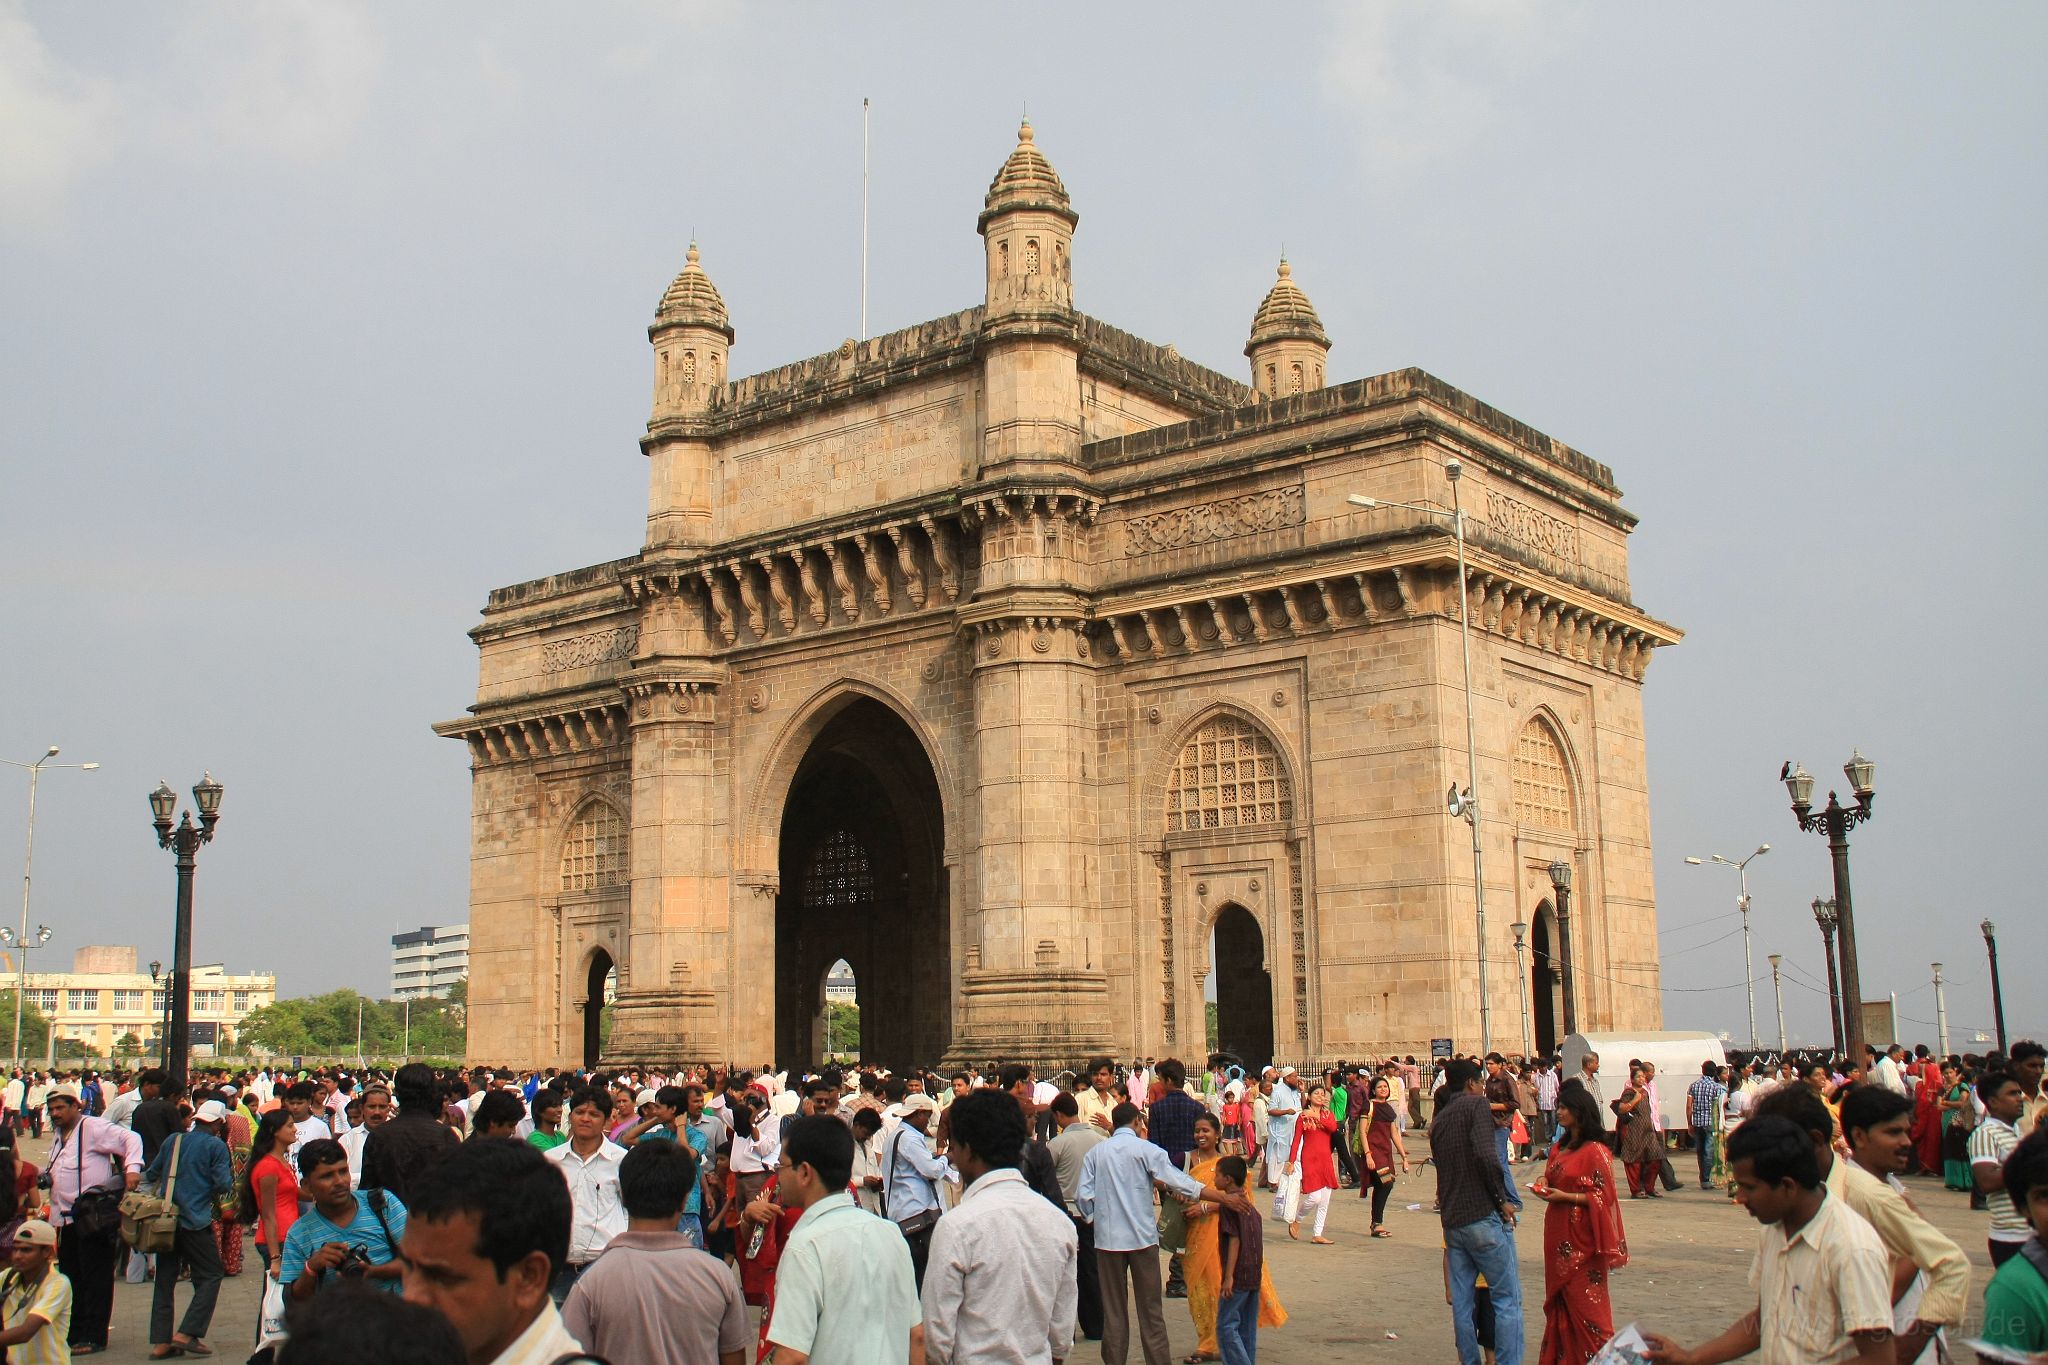 20100921-gatewaytoindia.jpg - Touristen am Gateway to India, Bombay/मुंबई/Mumbaī